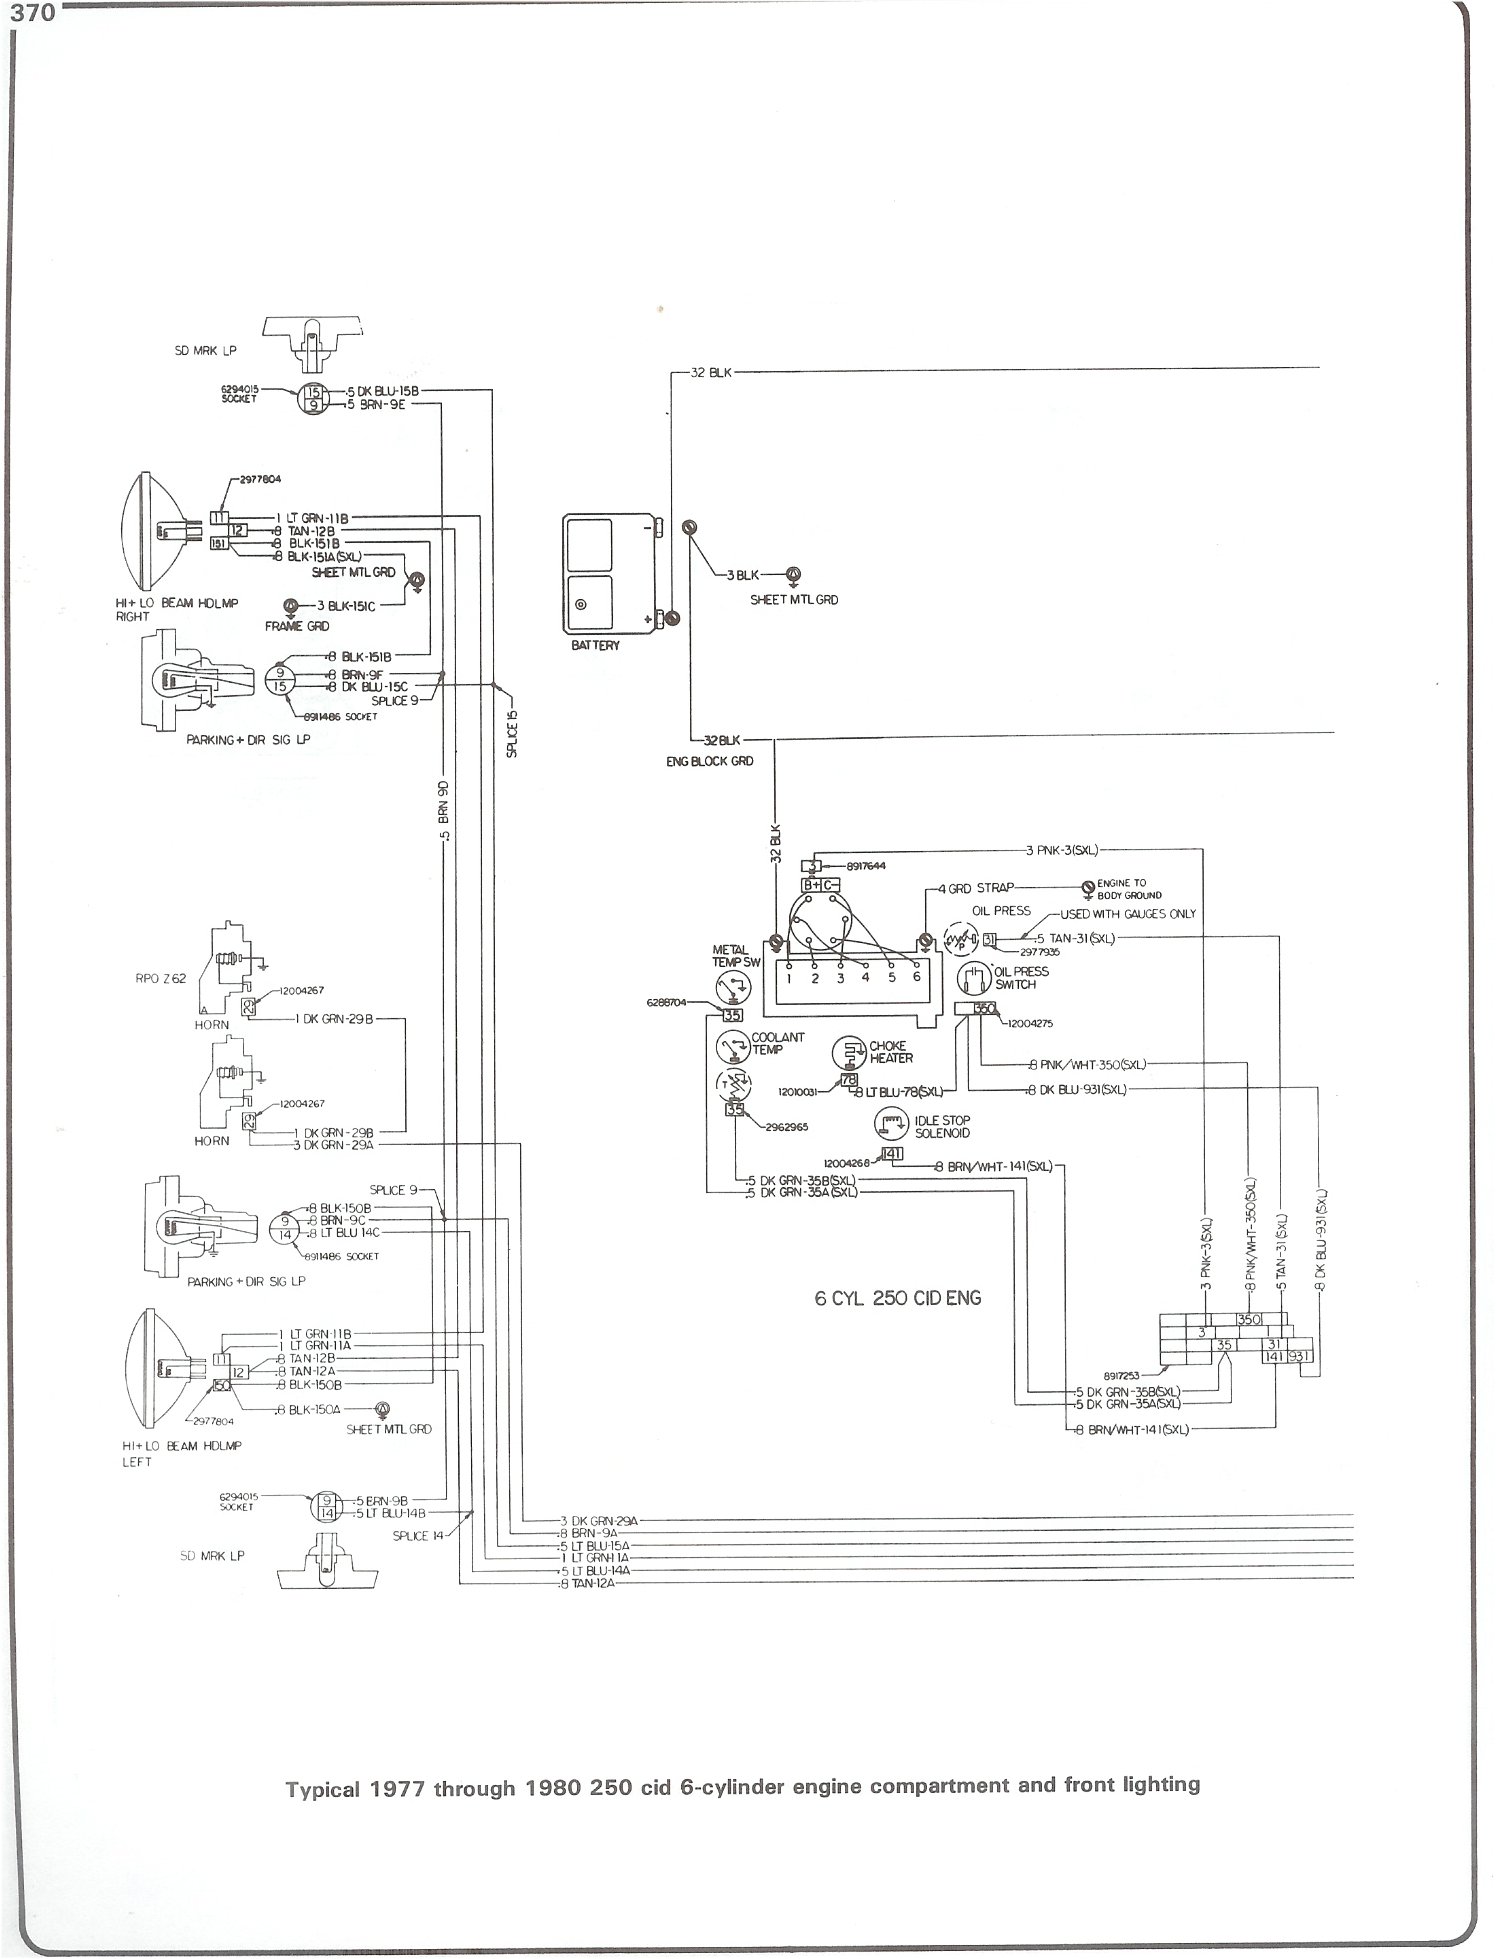 Tail Light Wiring Diagram 1992 Chevy Truck from schematron.org